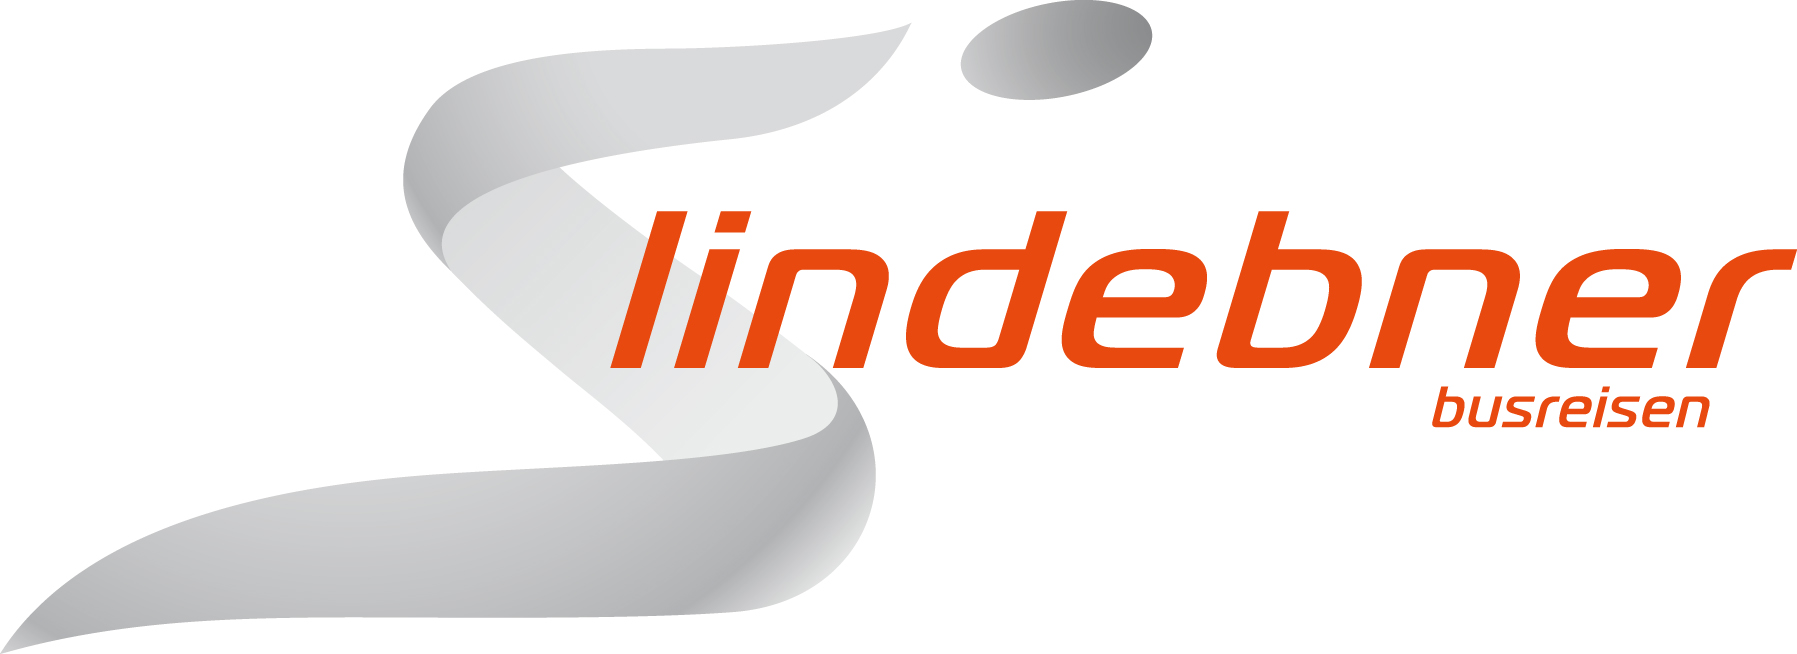 Logo Lindebner Busreisen CMYK